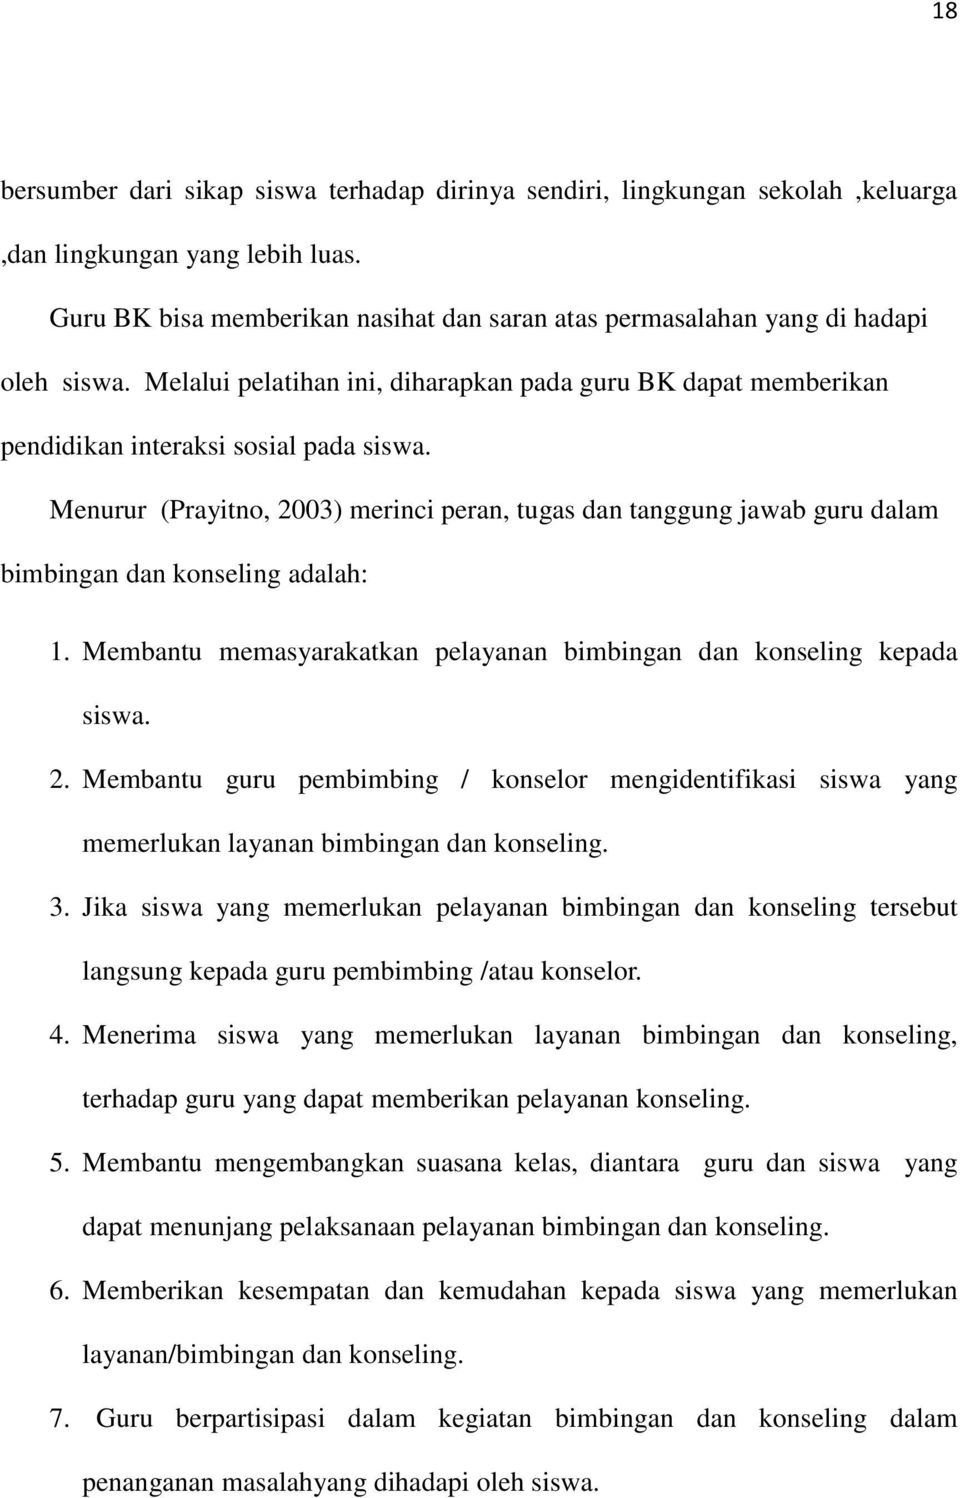 Menurur (Prayitno, 2003) merinci peran, tugas dan tanggung jawab guru dalam bimbingan dan konseling adalah: 1. Membantu memasyarakatkan pelayanan bimbingan dan konseling kepada siswa. 2. Membantu guru pembimbing / konselor mengidentifikasi siswa yang memerlukan layanan bimbingan dan konseling.